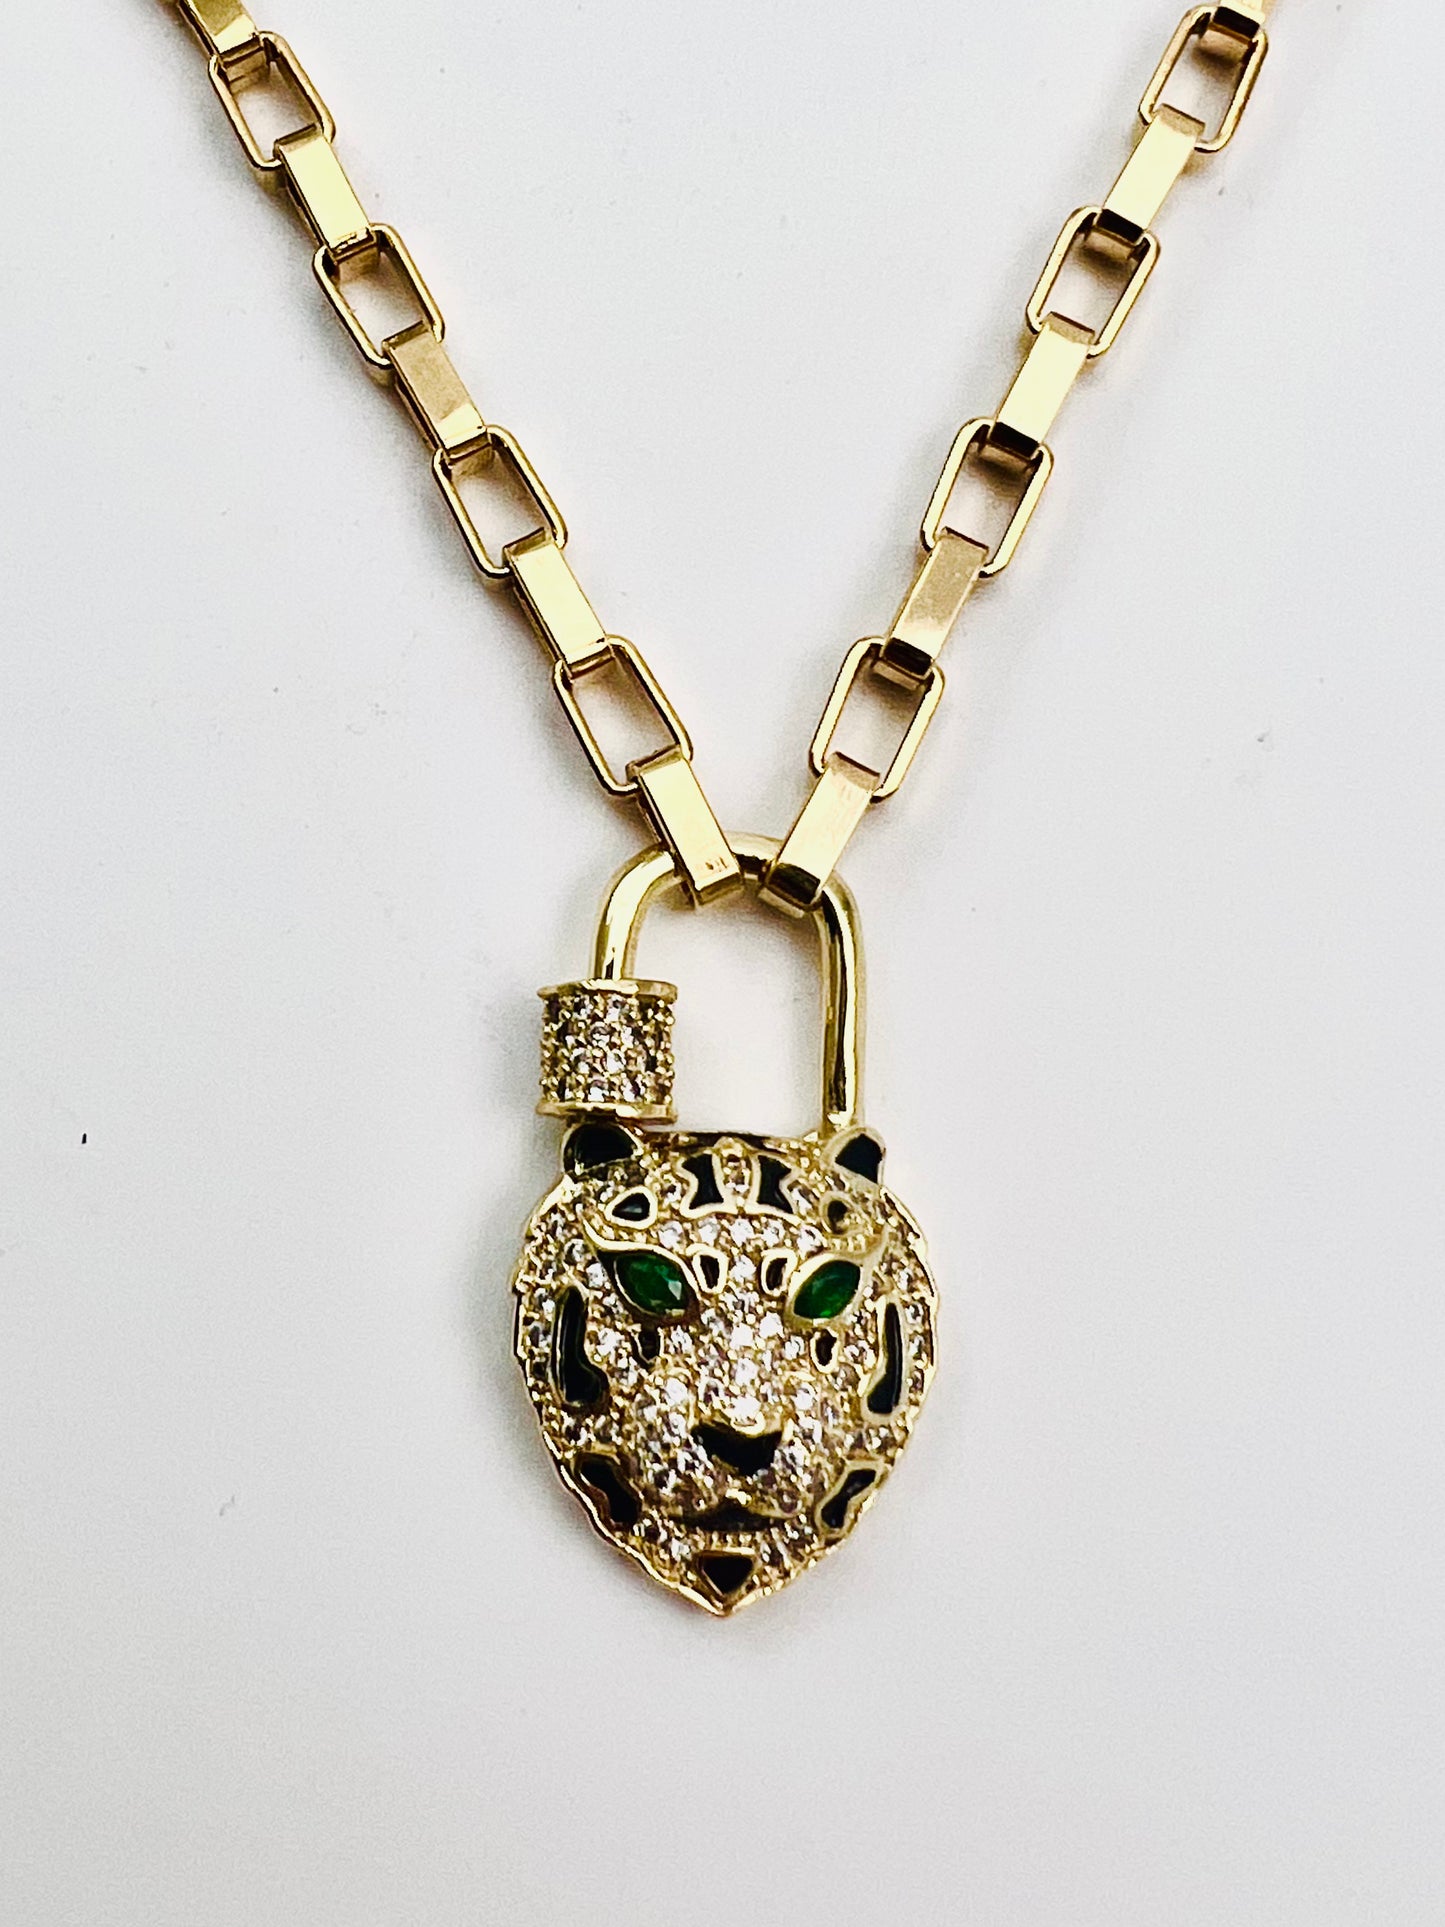 Lioness Necklace